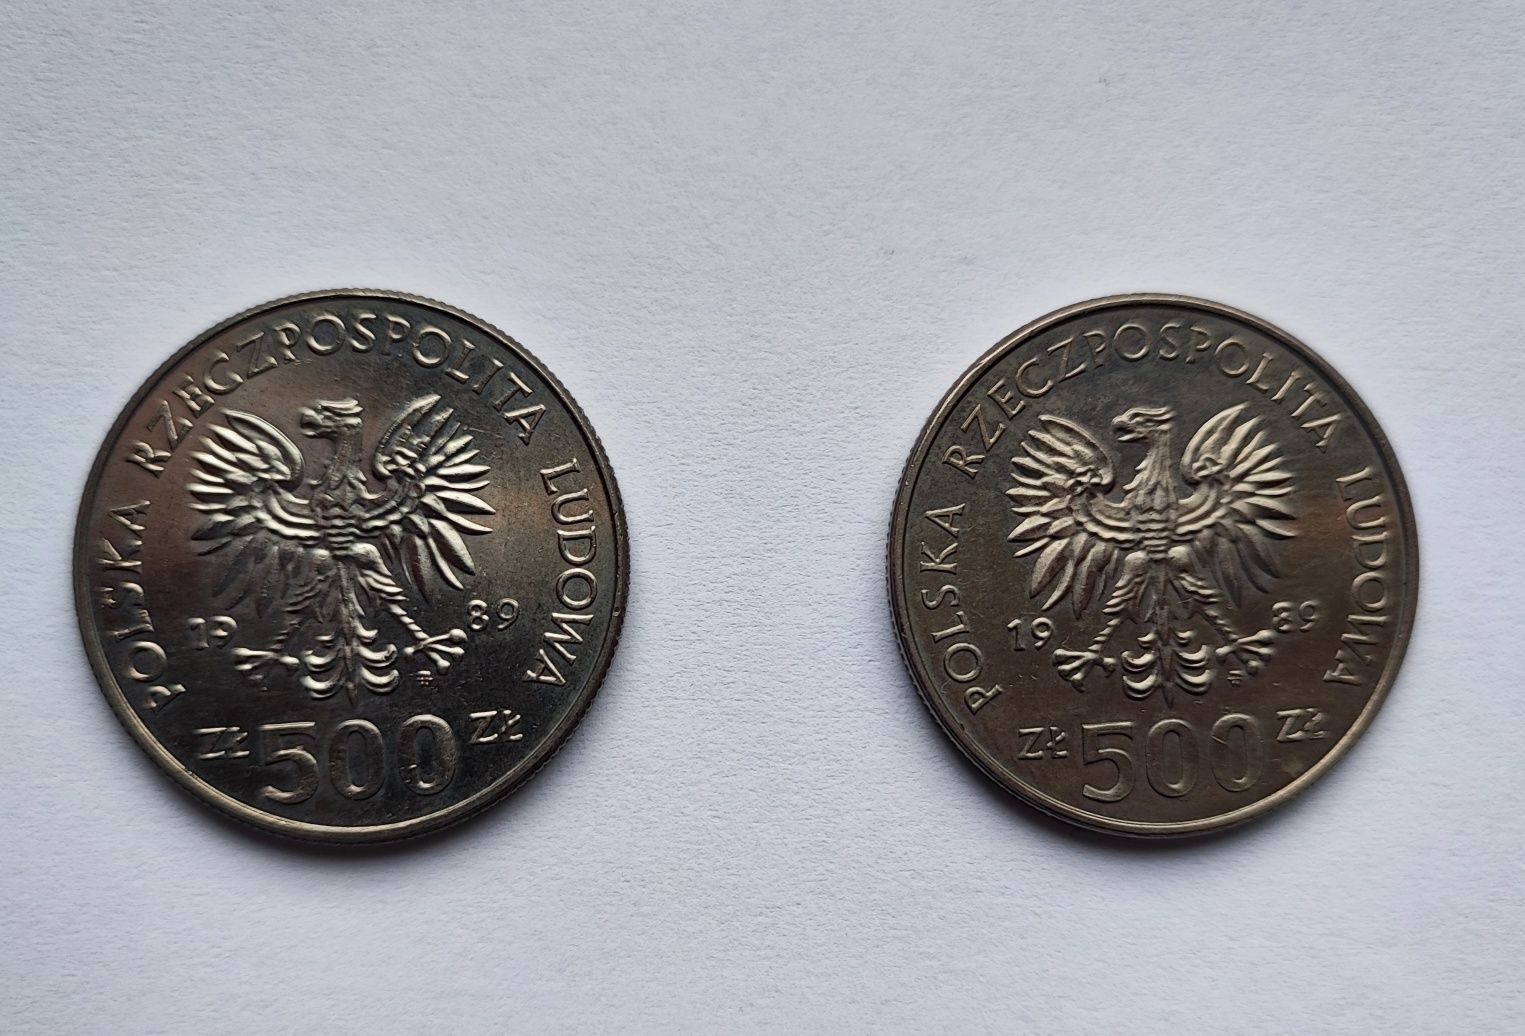 Moneta. Monety 500zł z 1989 r.